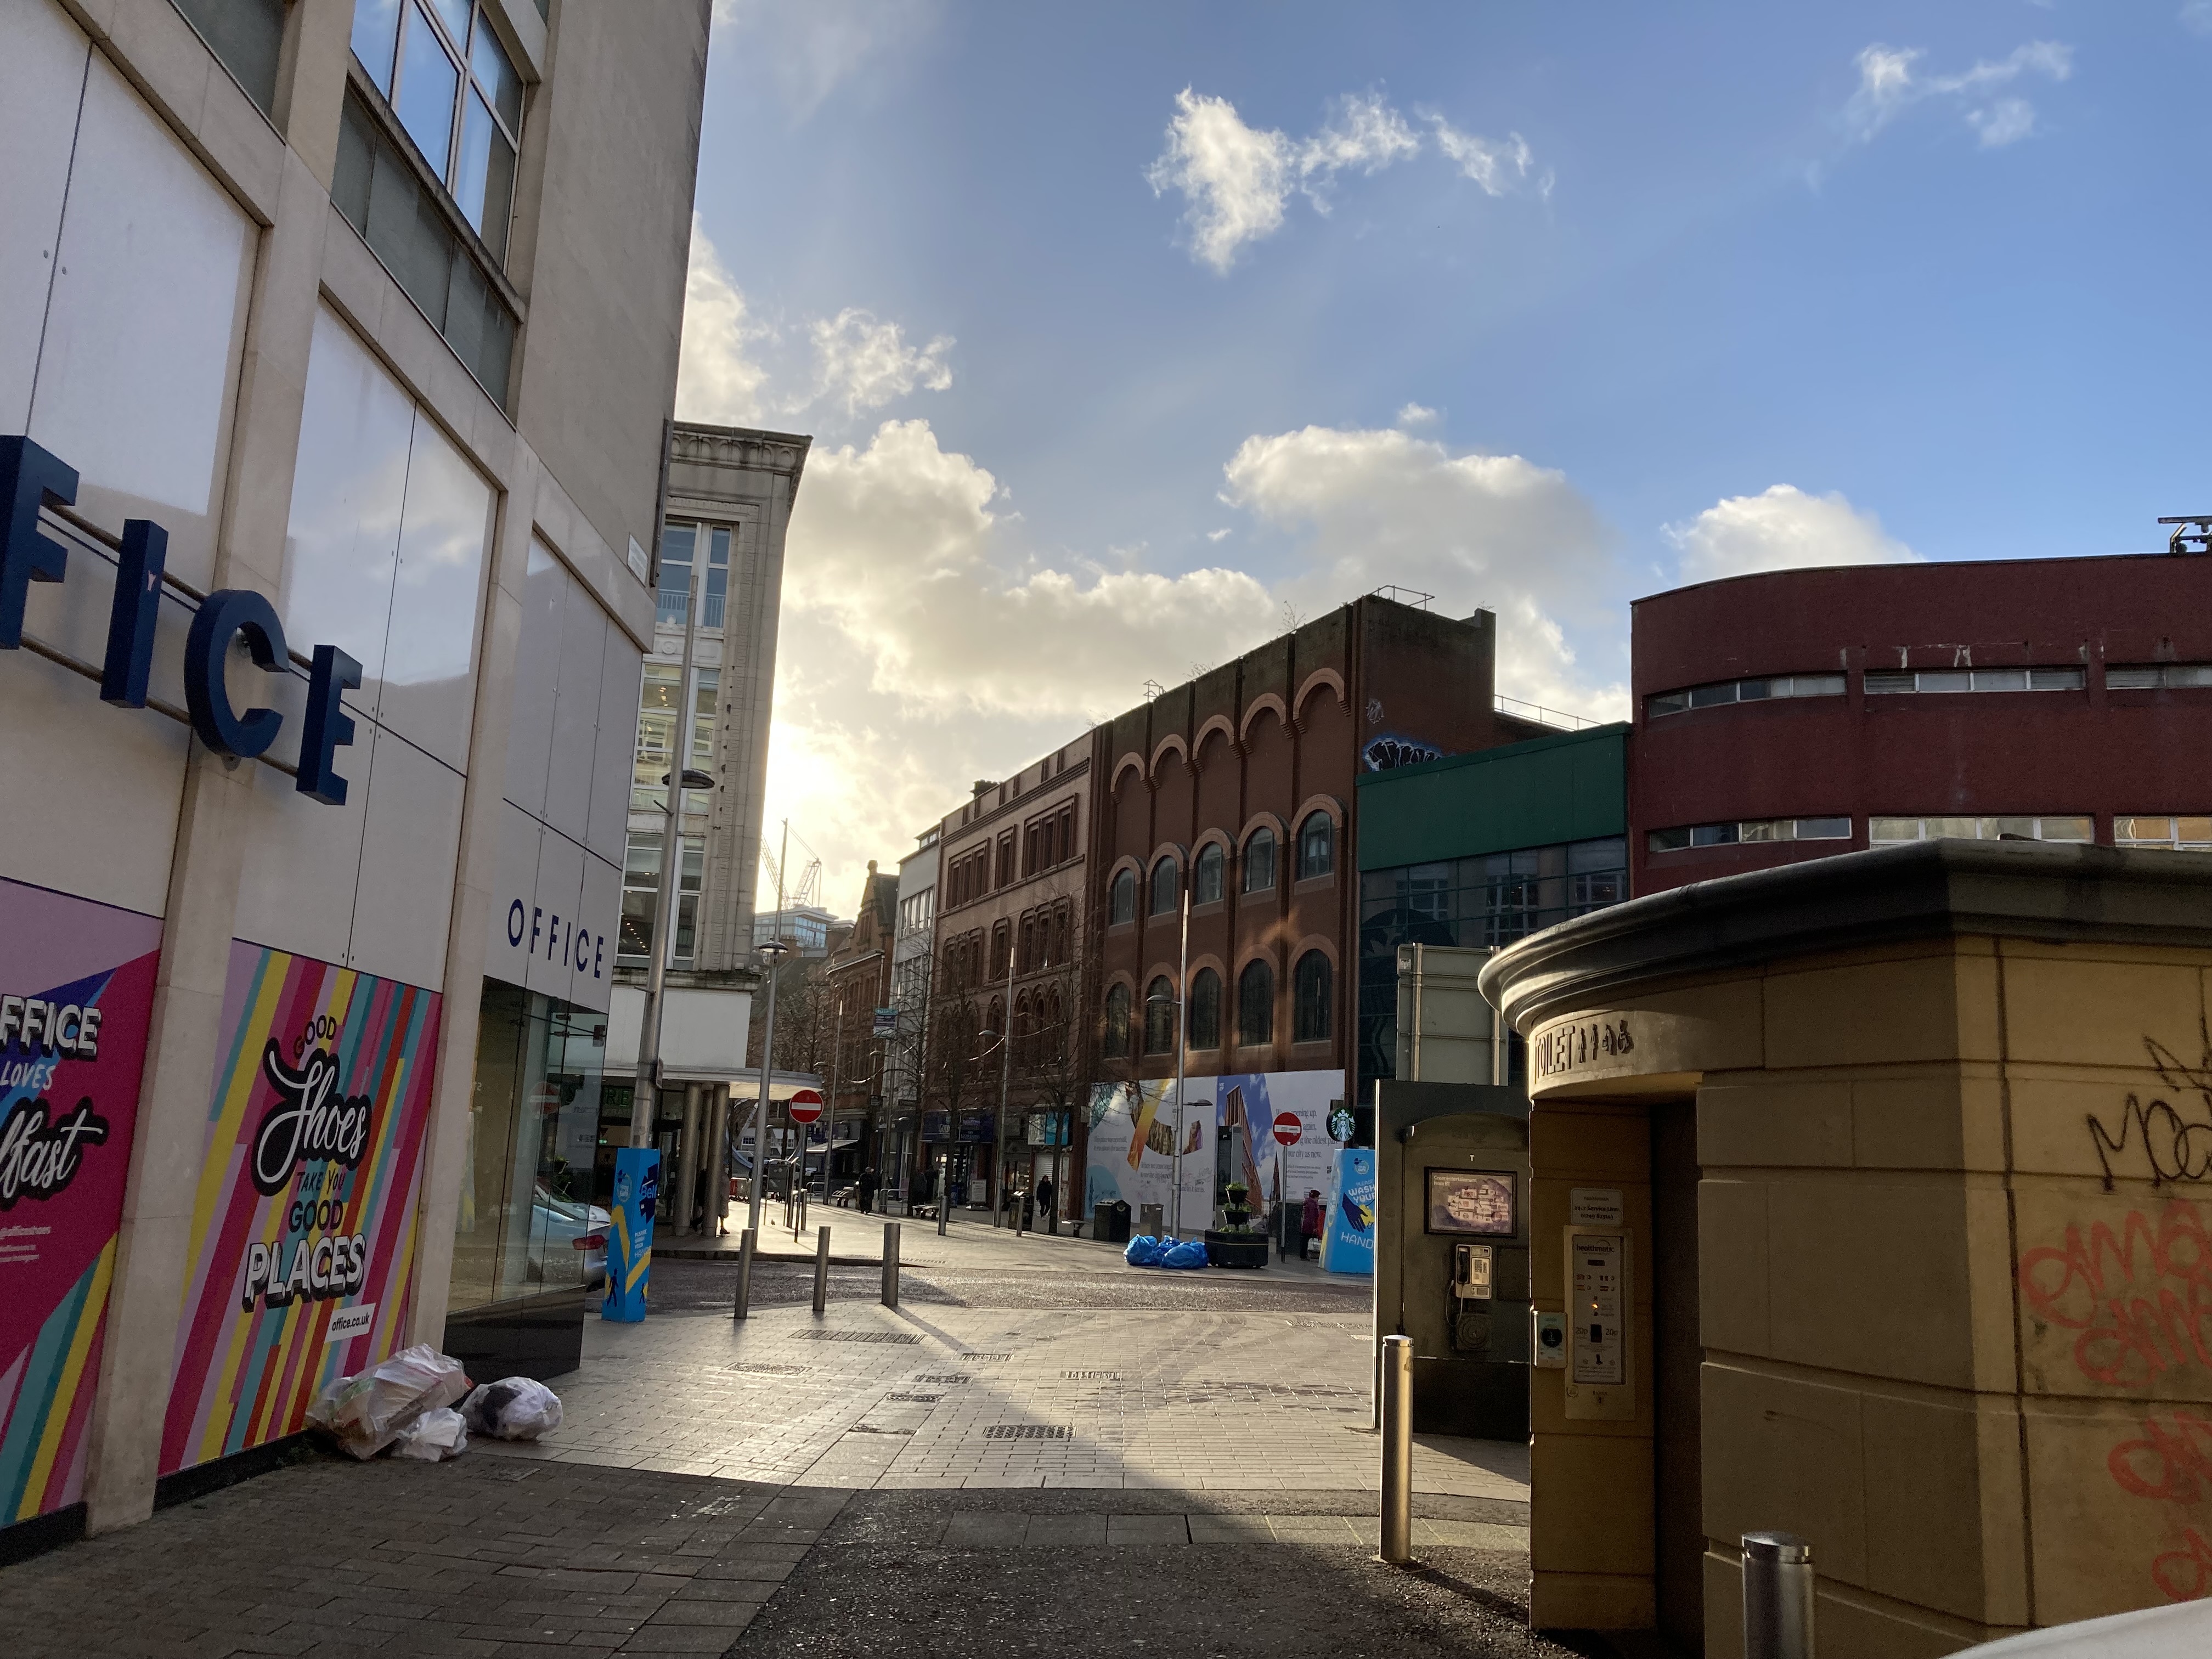 Belfast Centre site: East view